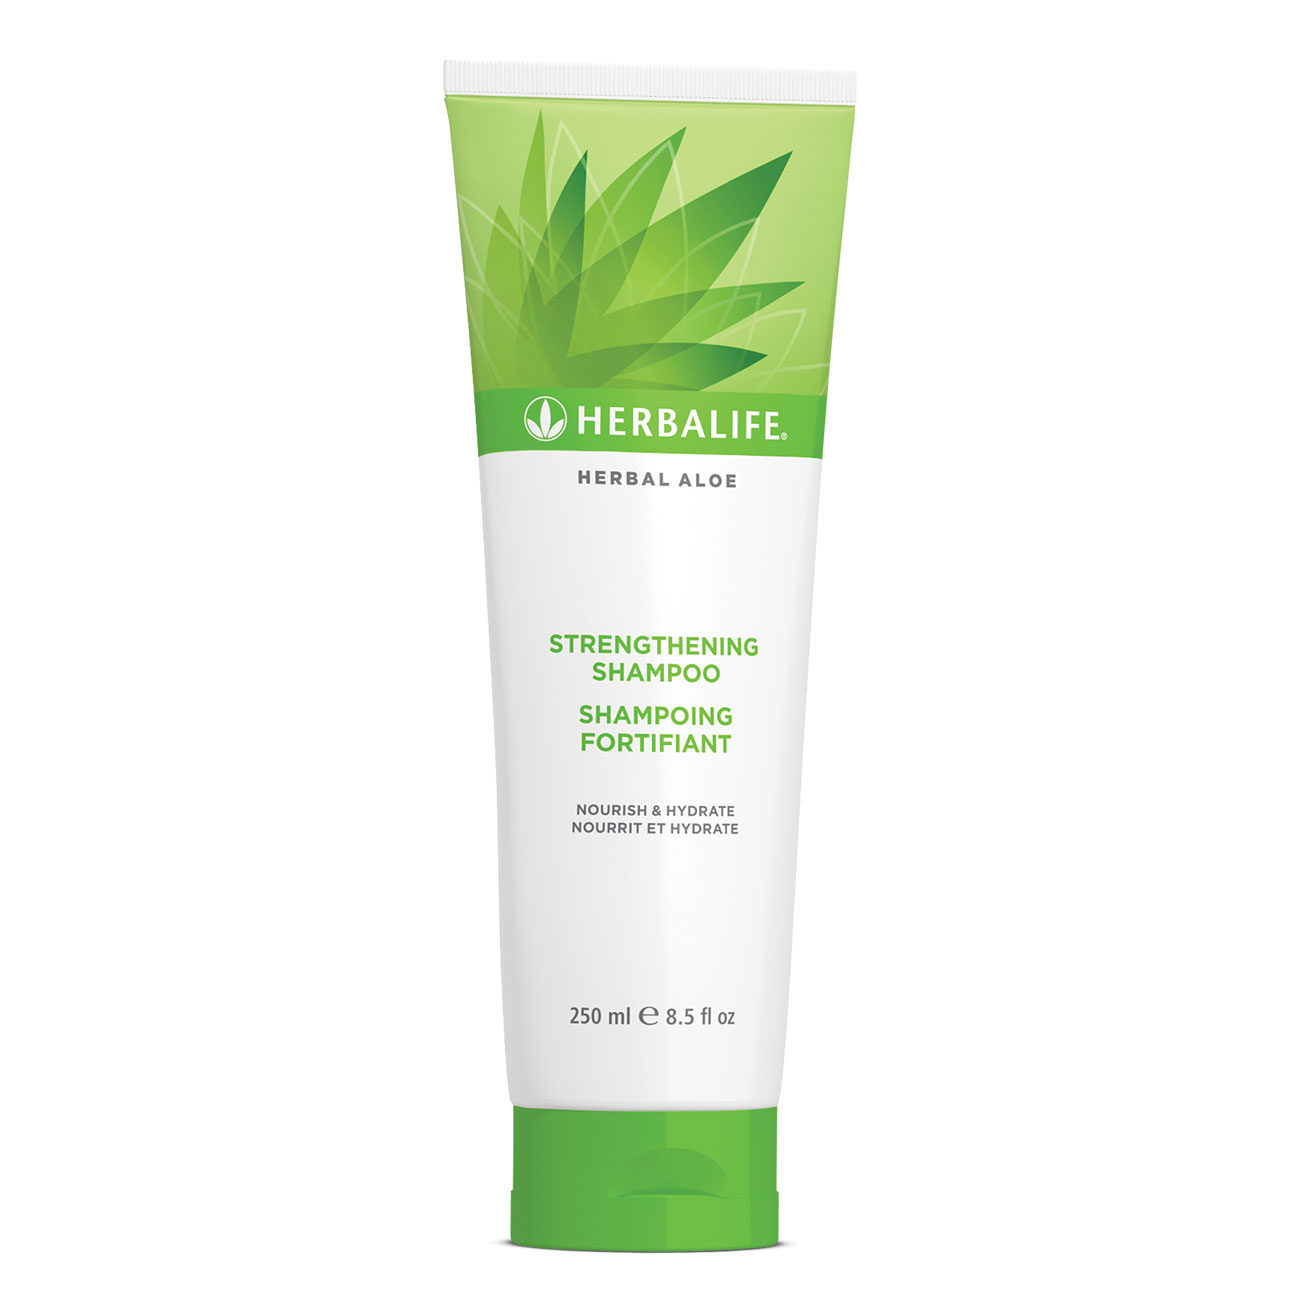 Herbal Aloë Strengthening shampoo  product shot